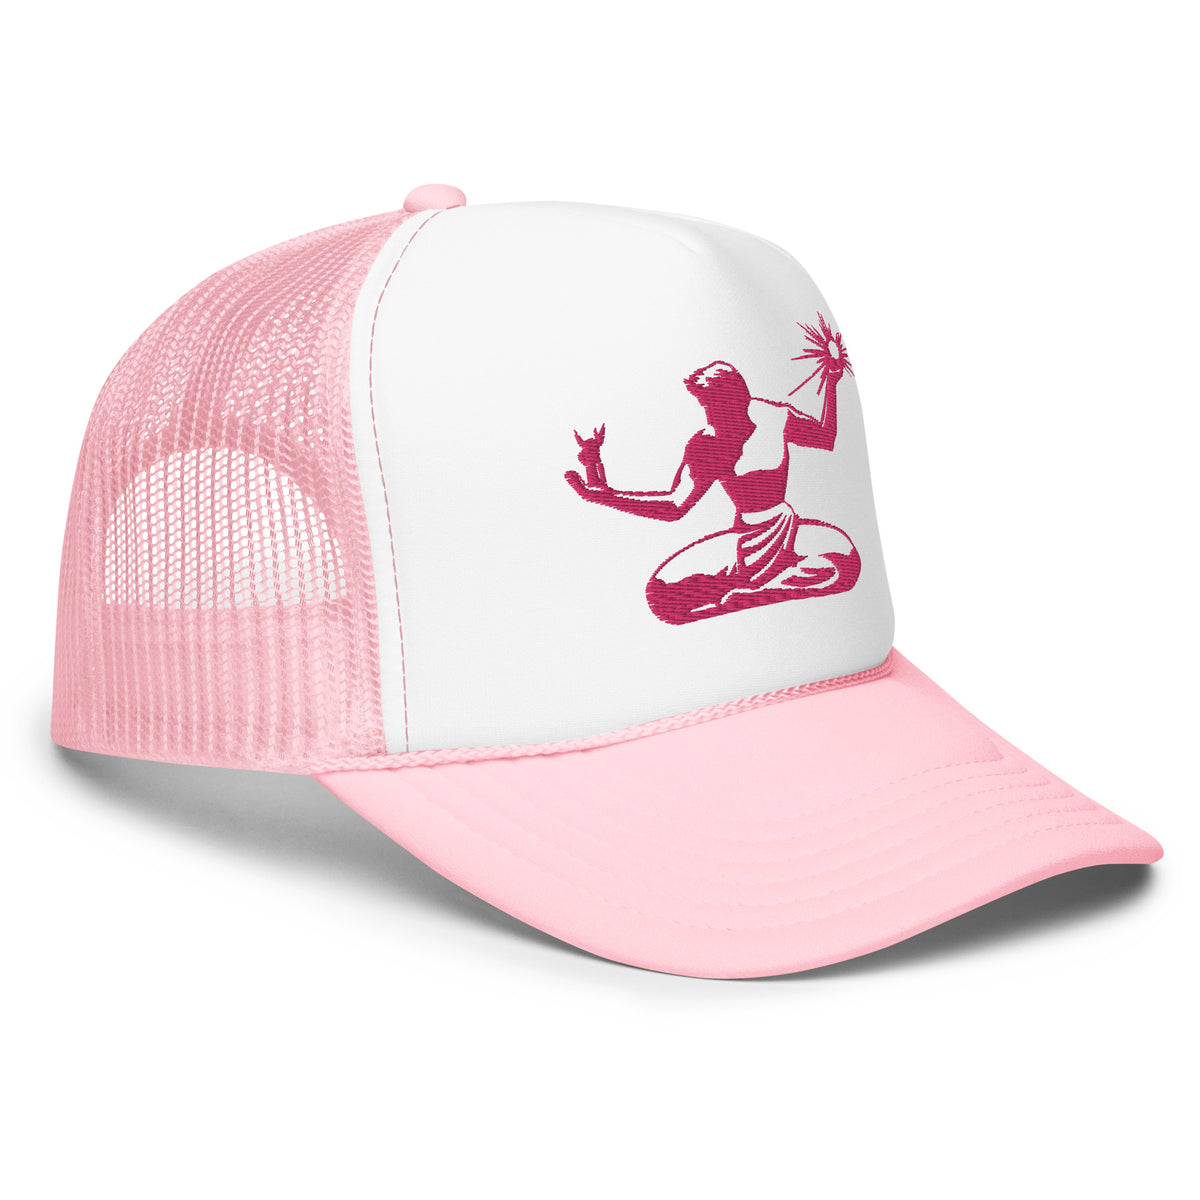 Spirit of Detroit Foam Trucker Hat - Embroidered - Hot Pink / White    